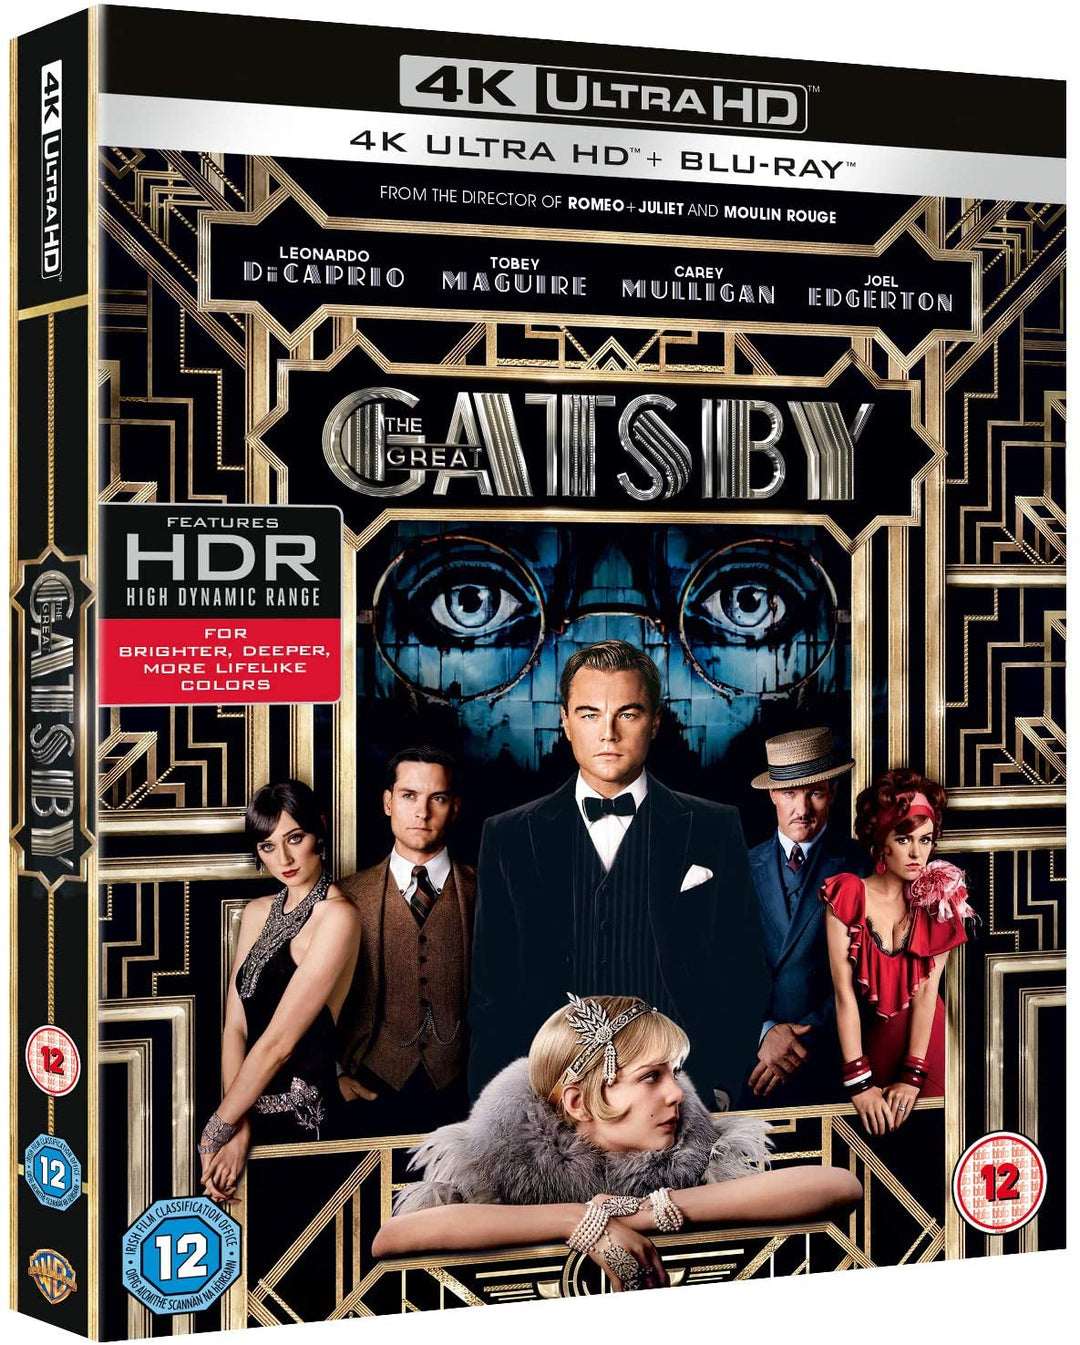 The Great Gatsby - Romance/Drama [DVD]